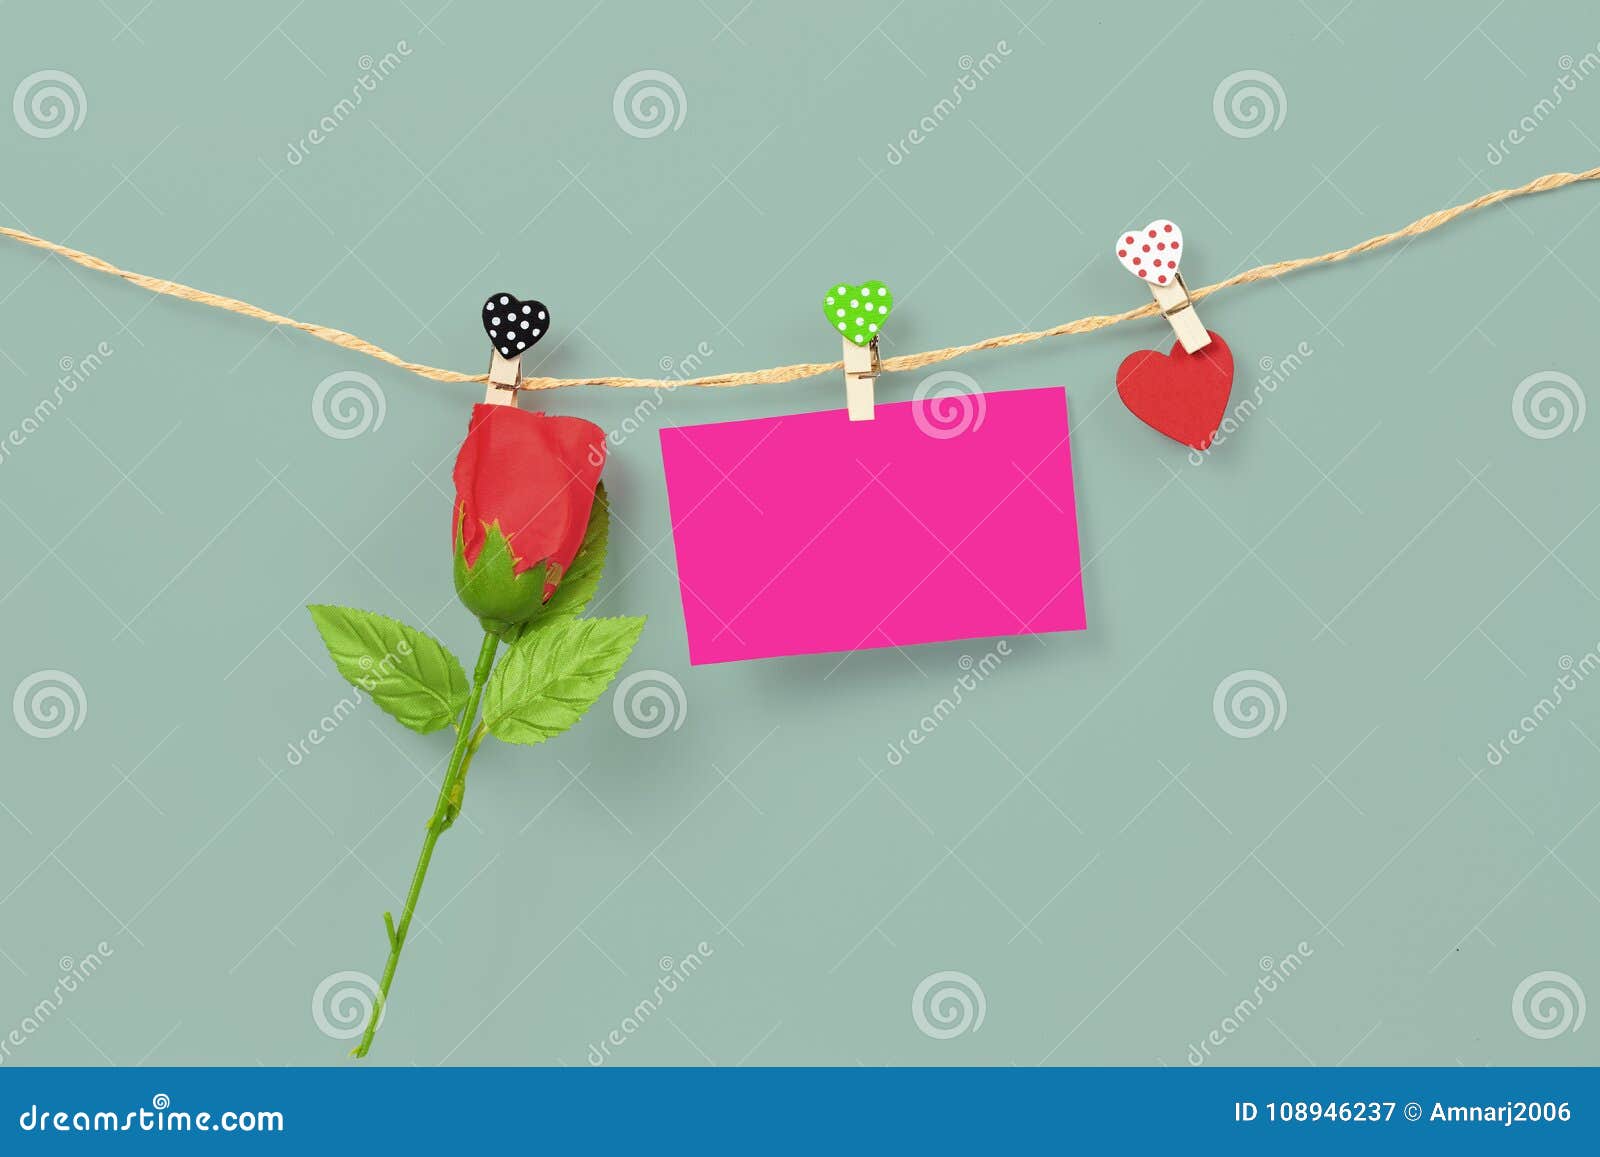 Handmade Wood Hearts Hanging on Cloth Line Stock Image - Image of romantic,  wedding: 108946237